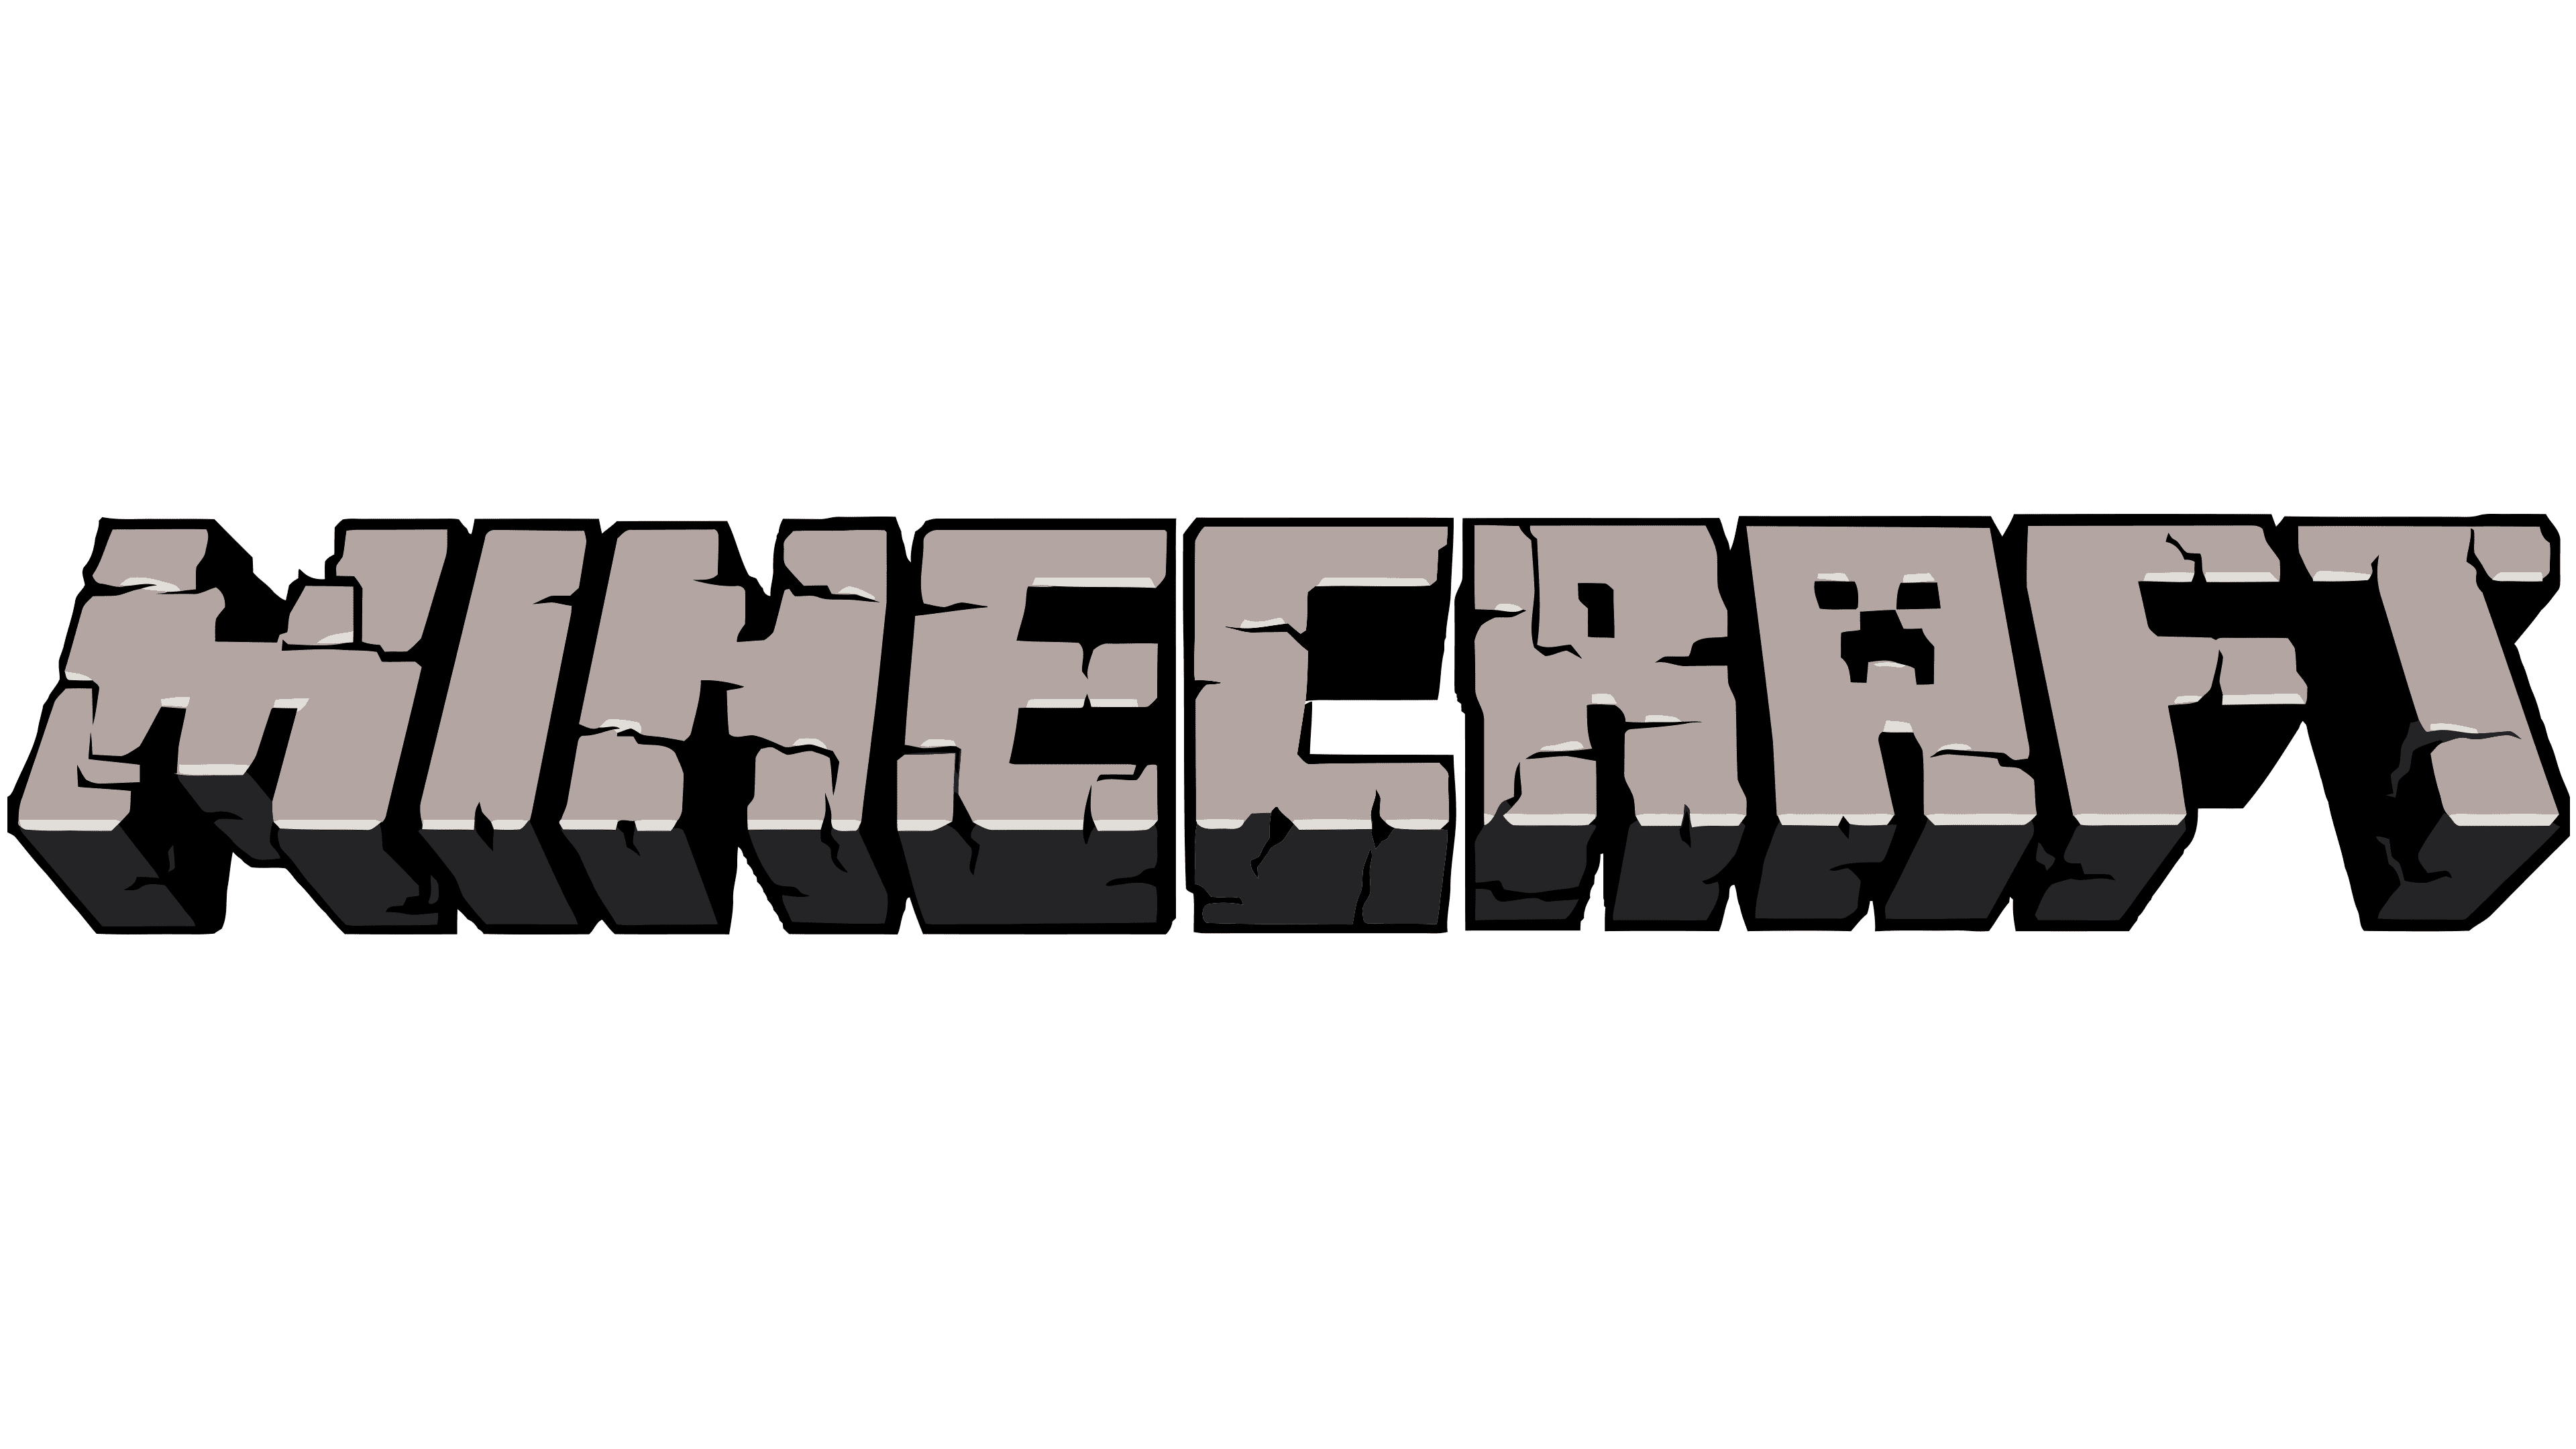 minecraft bedrock edition logo